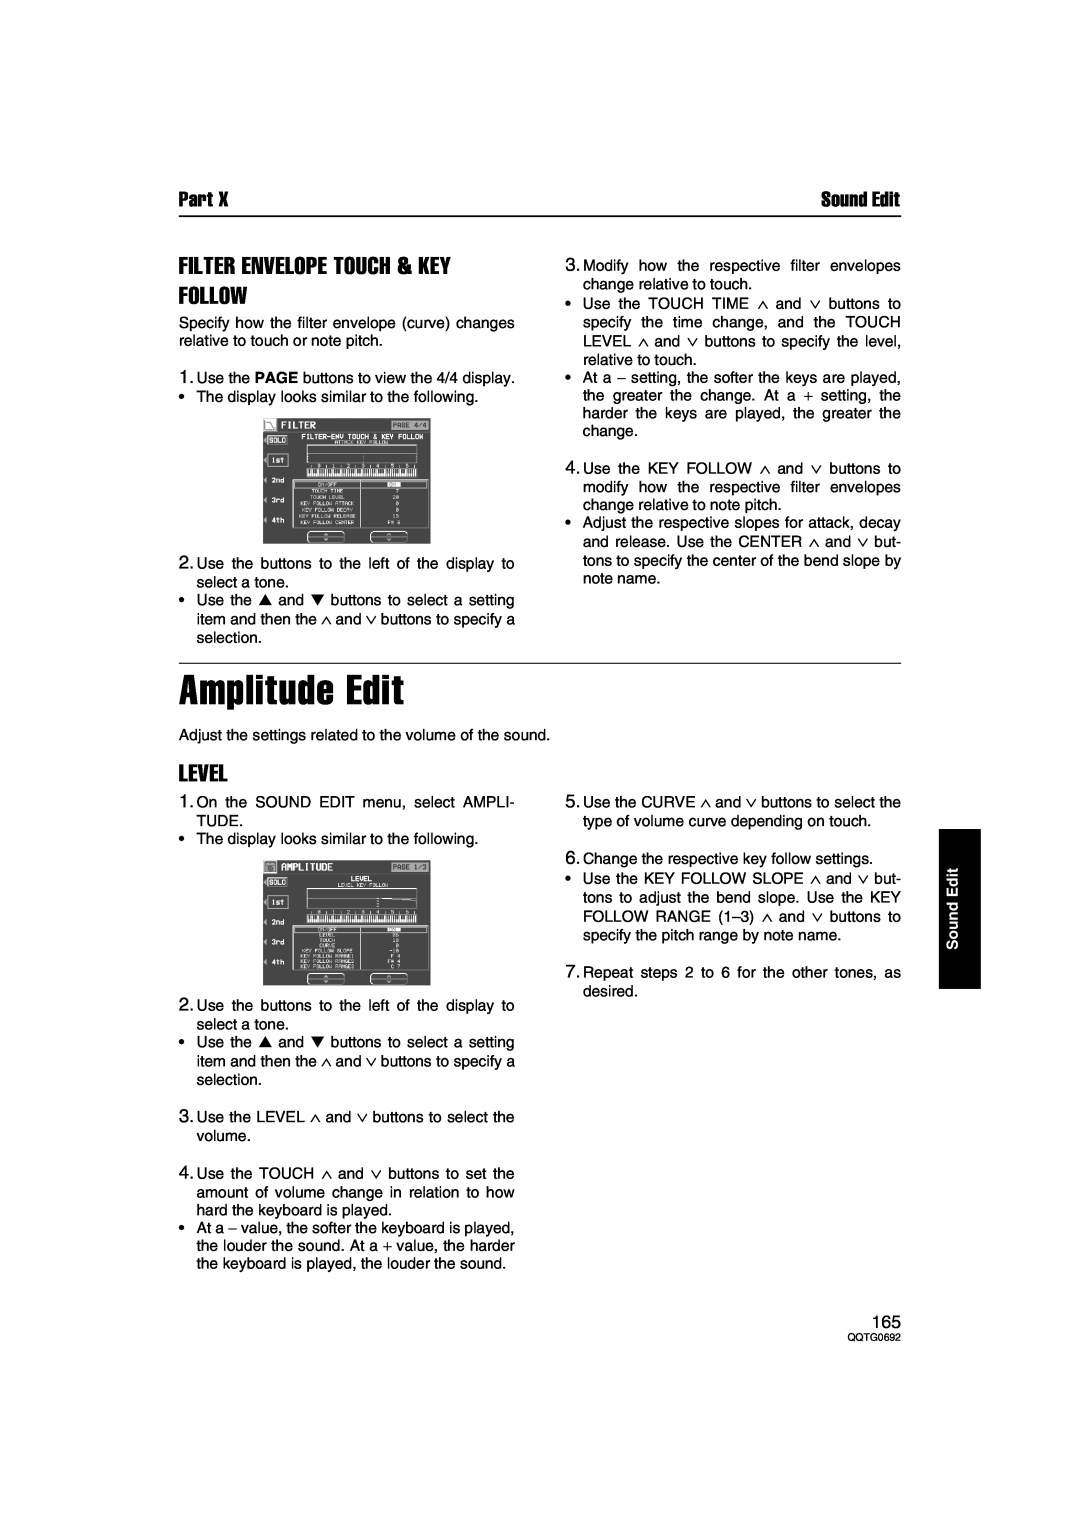 Panasonic SX-KN2400, SX-KN2600 manual Amplitude Edit, Filter Envelope Touch & Key Follow, Level, Part, Sound Edit 